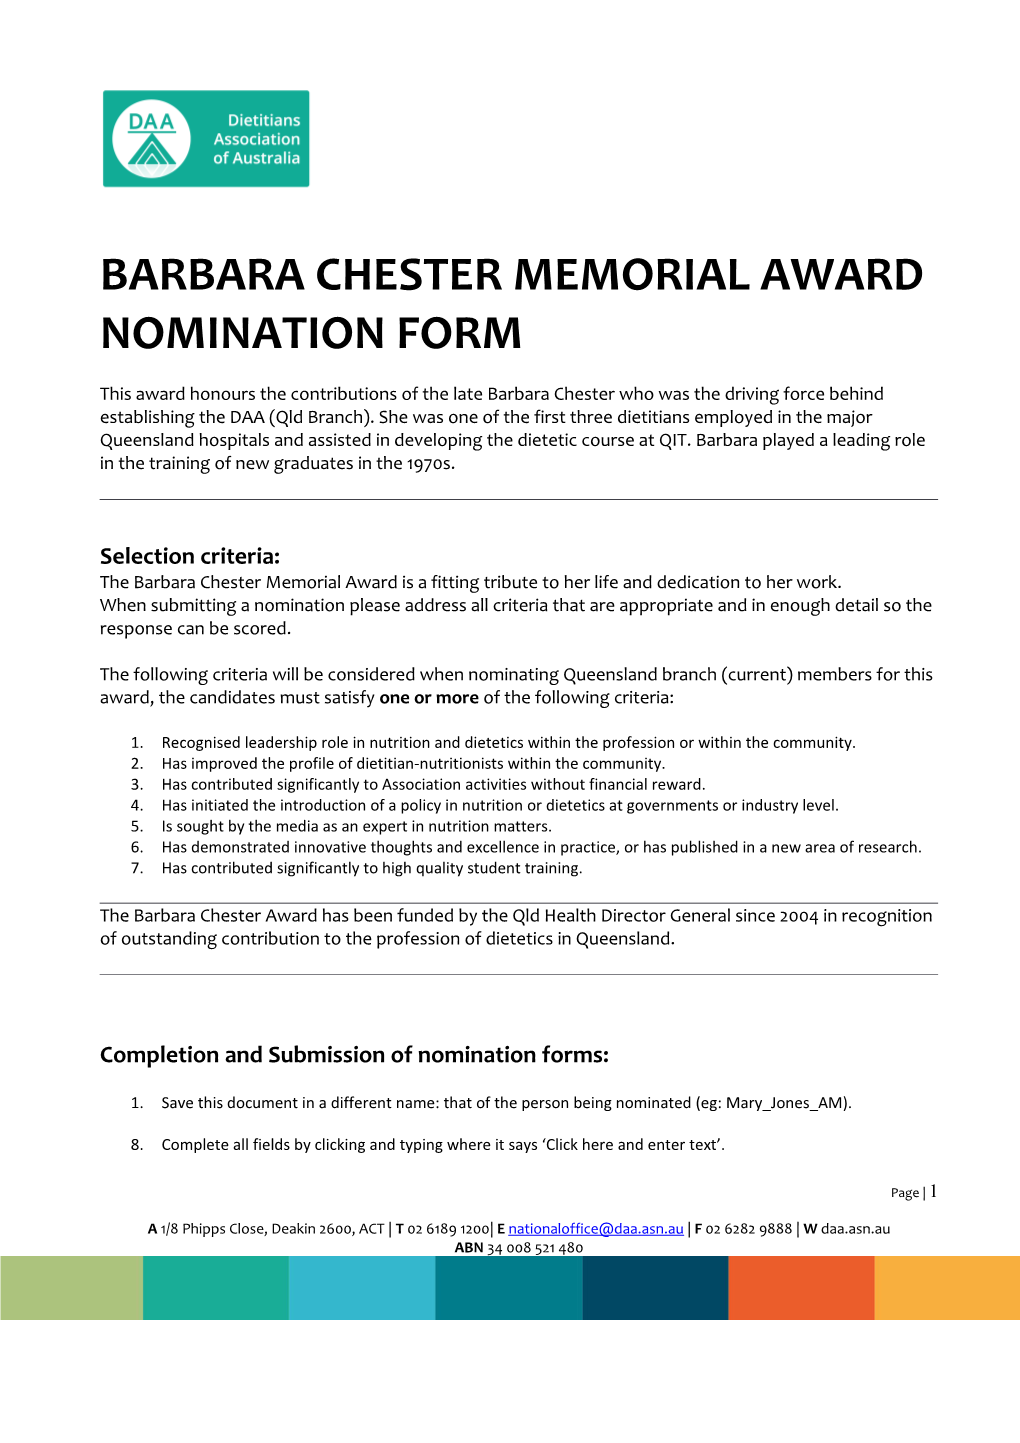 Barbara Chester Memorial Award